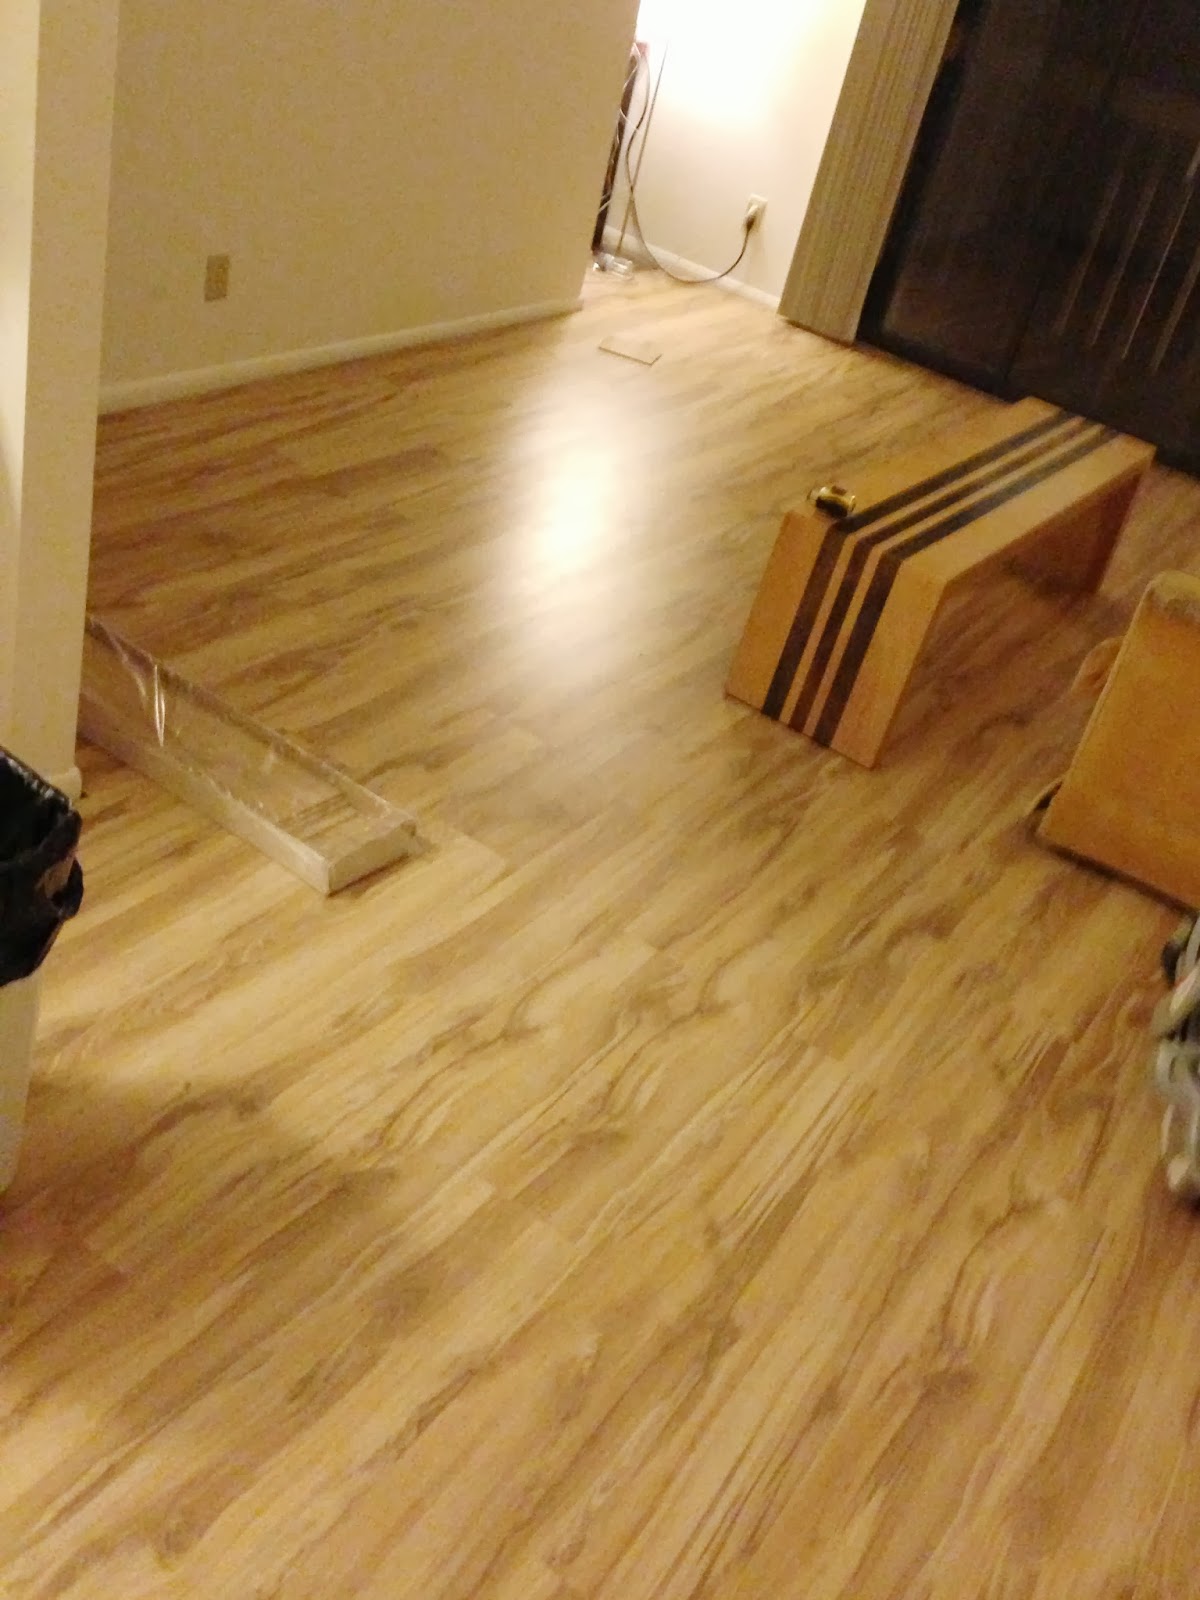 How We Put Hardwood Over Carpet Messymom, Can U Put Laminate Flooring Over Carpet